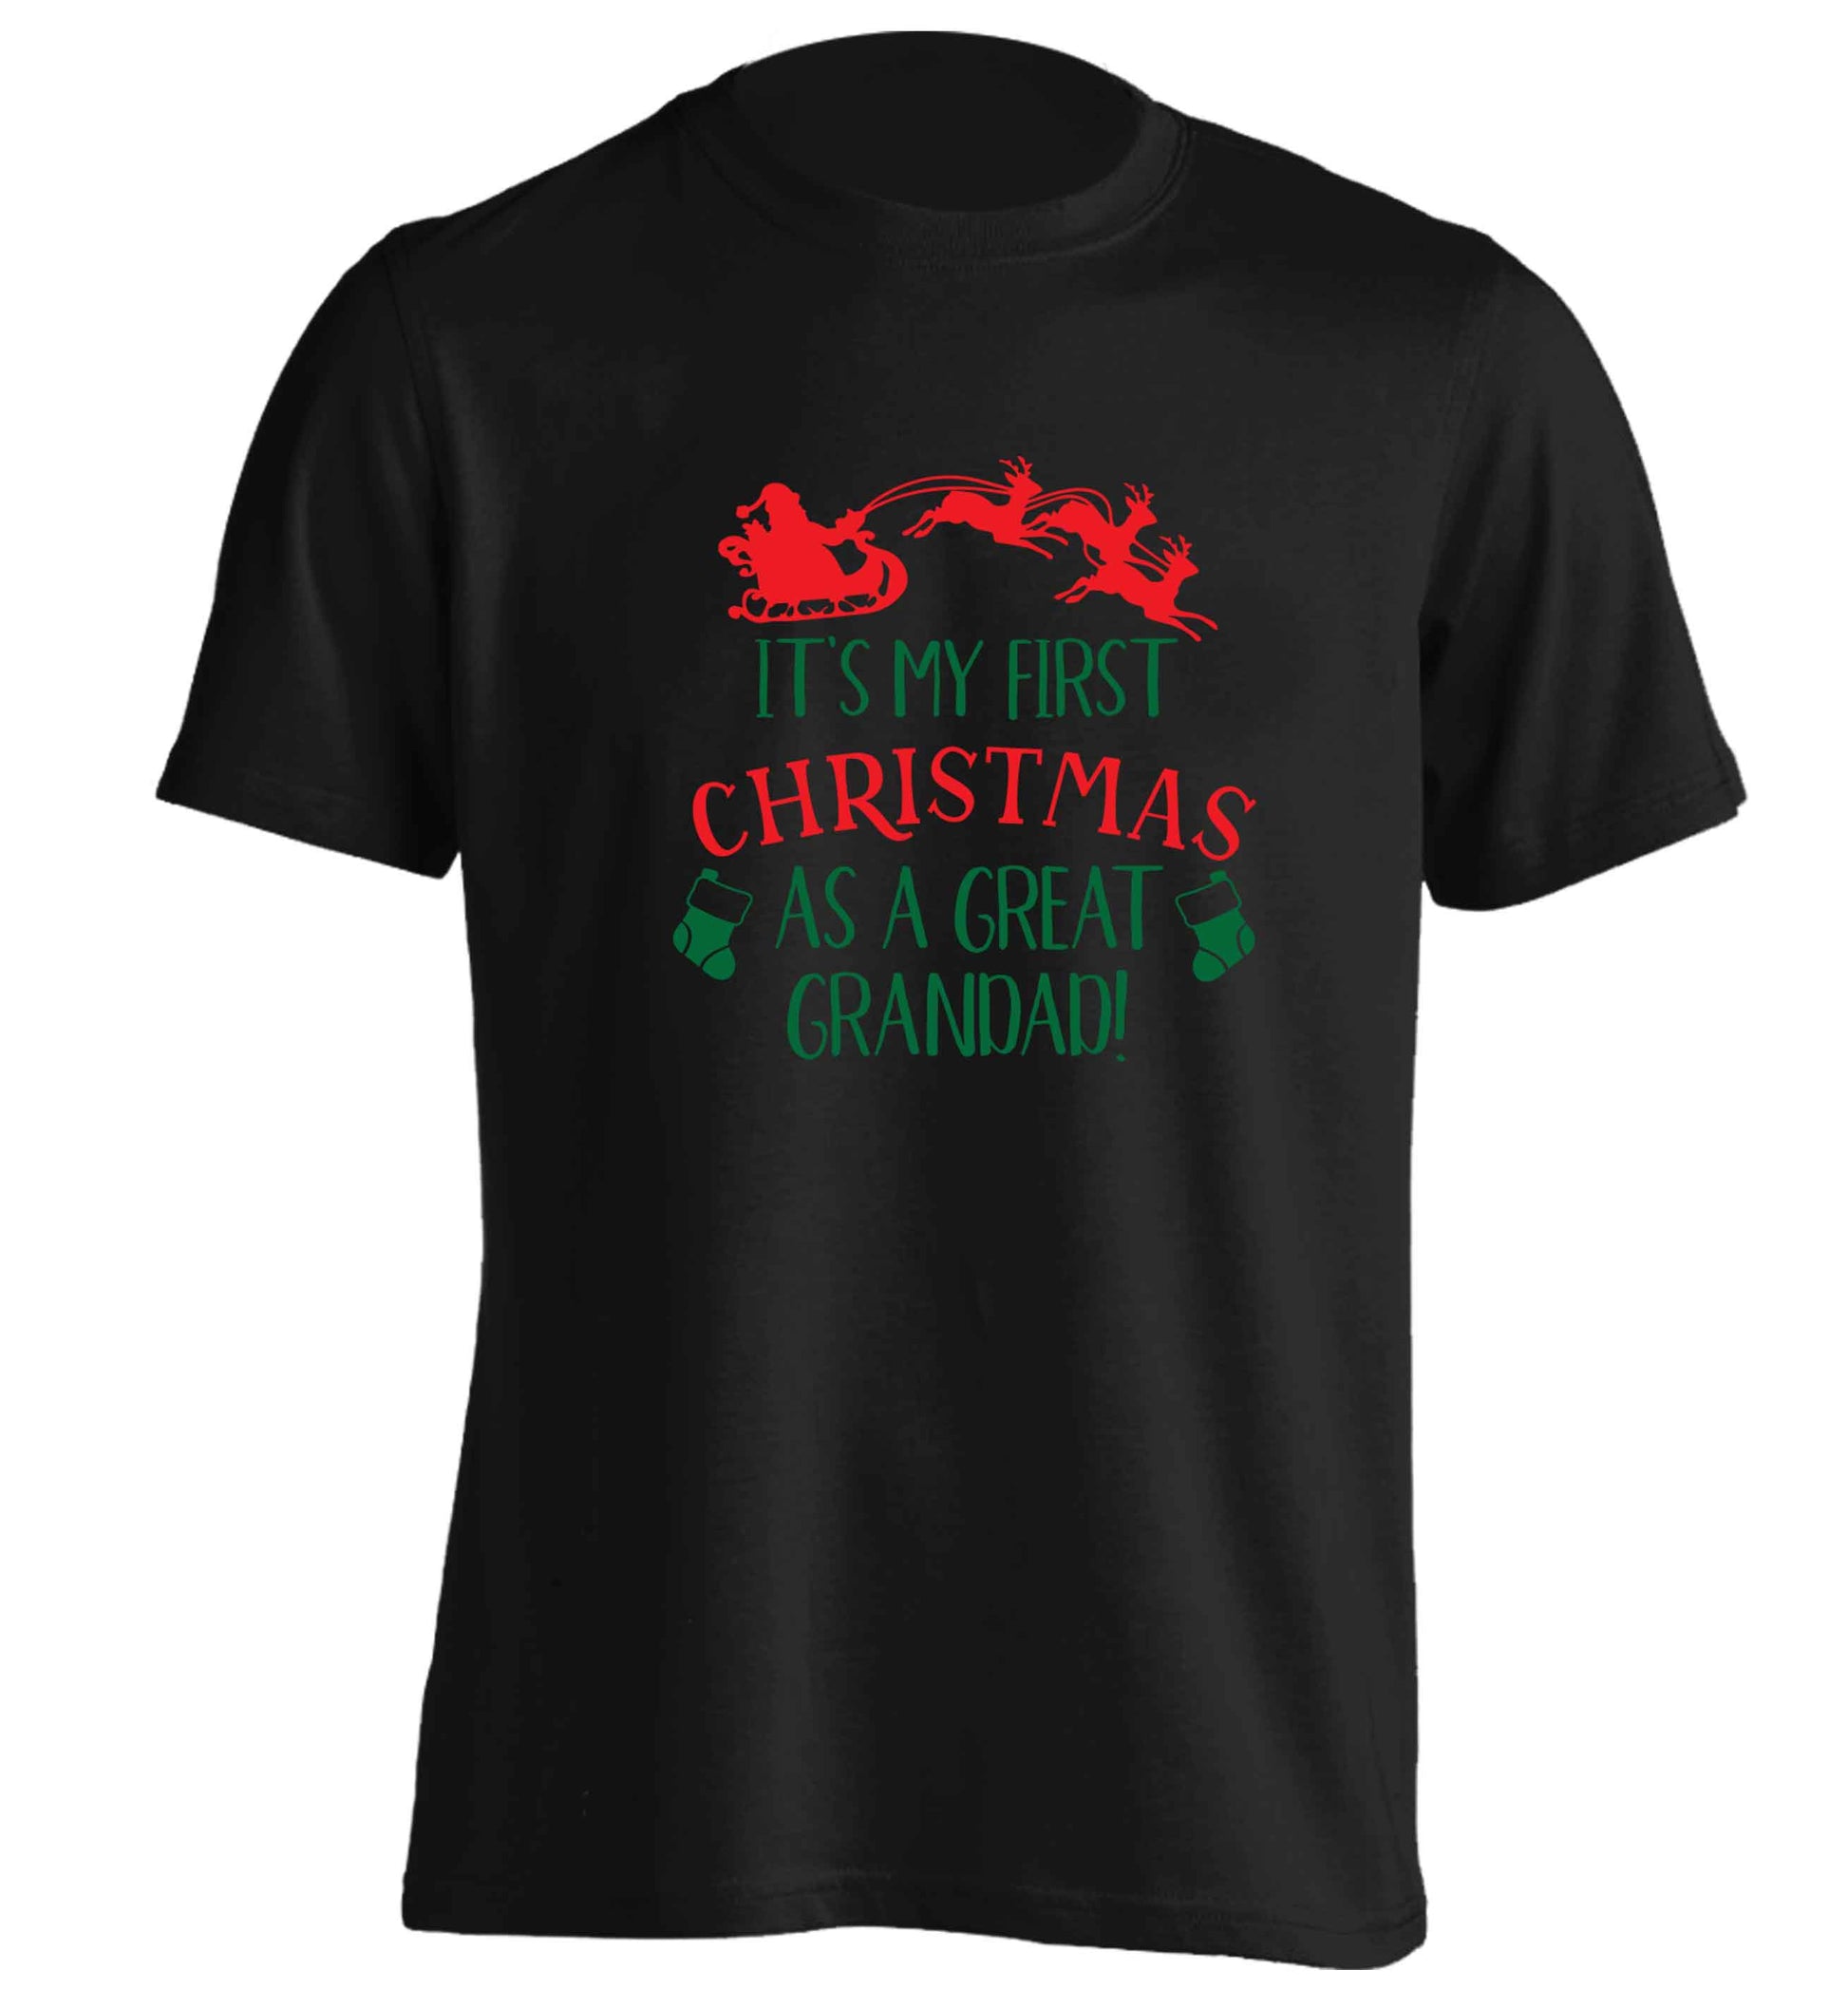 It's my first Christmas as a great grandad! adults unisex black Tshirt 2XL